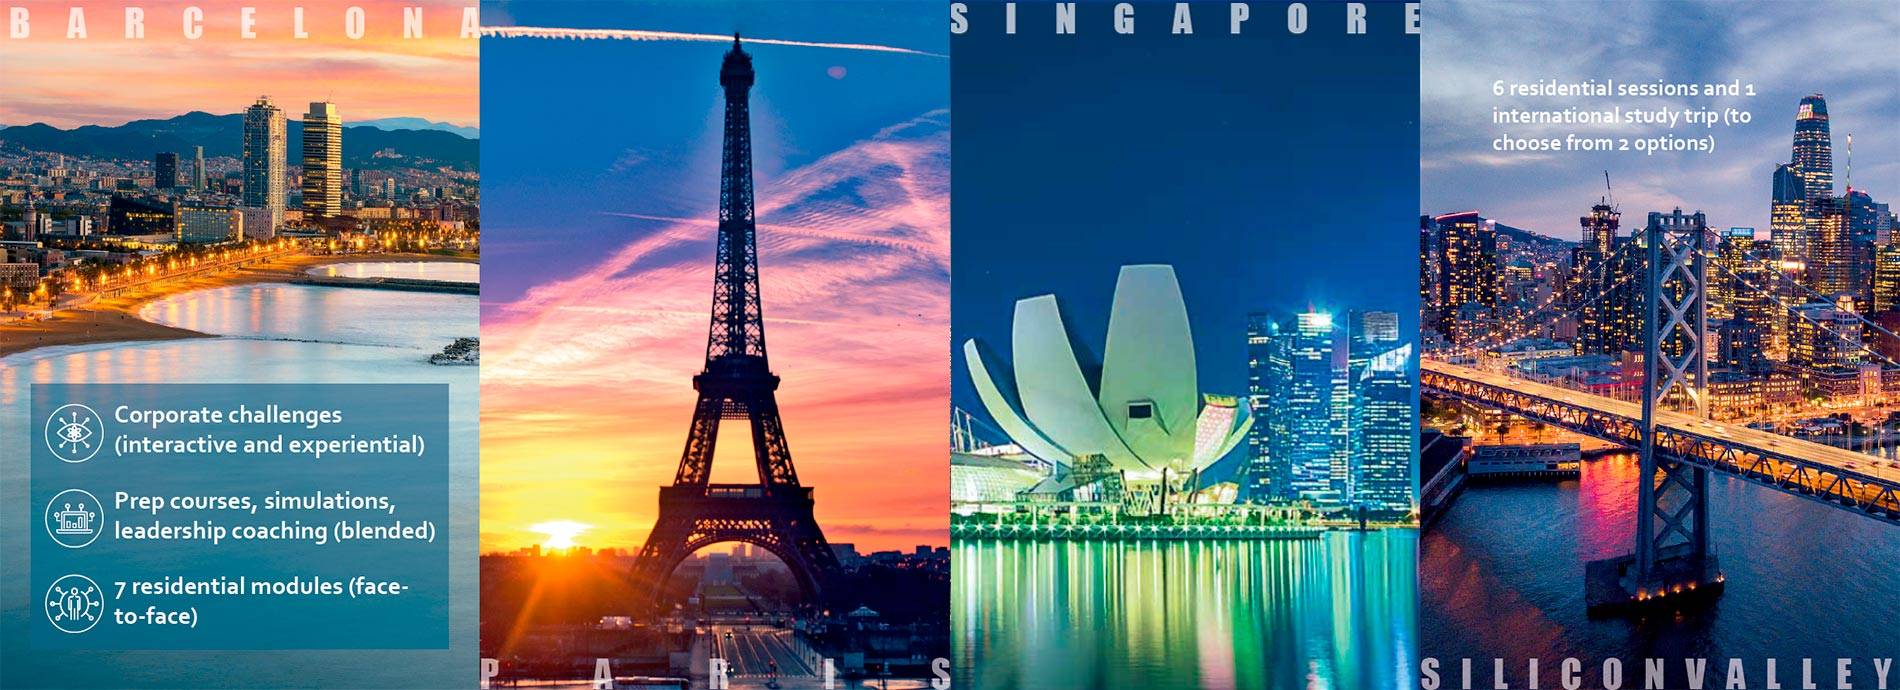 Global EMBA Study trip - Singapore